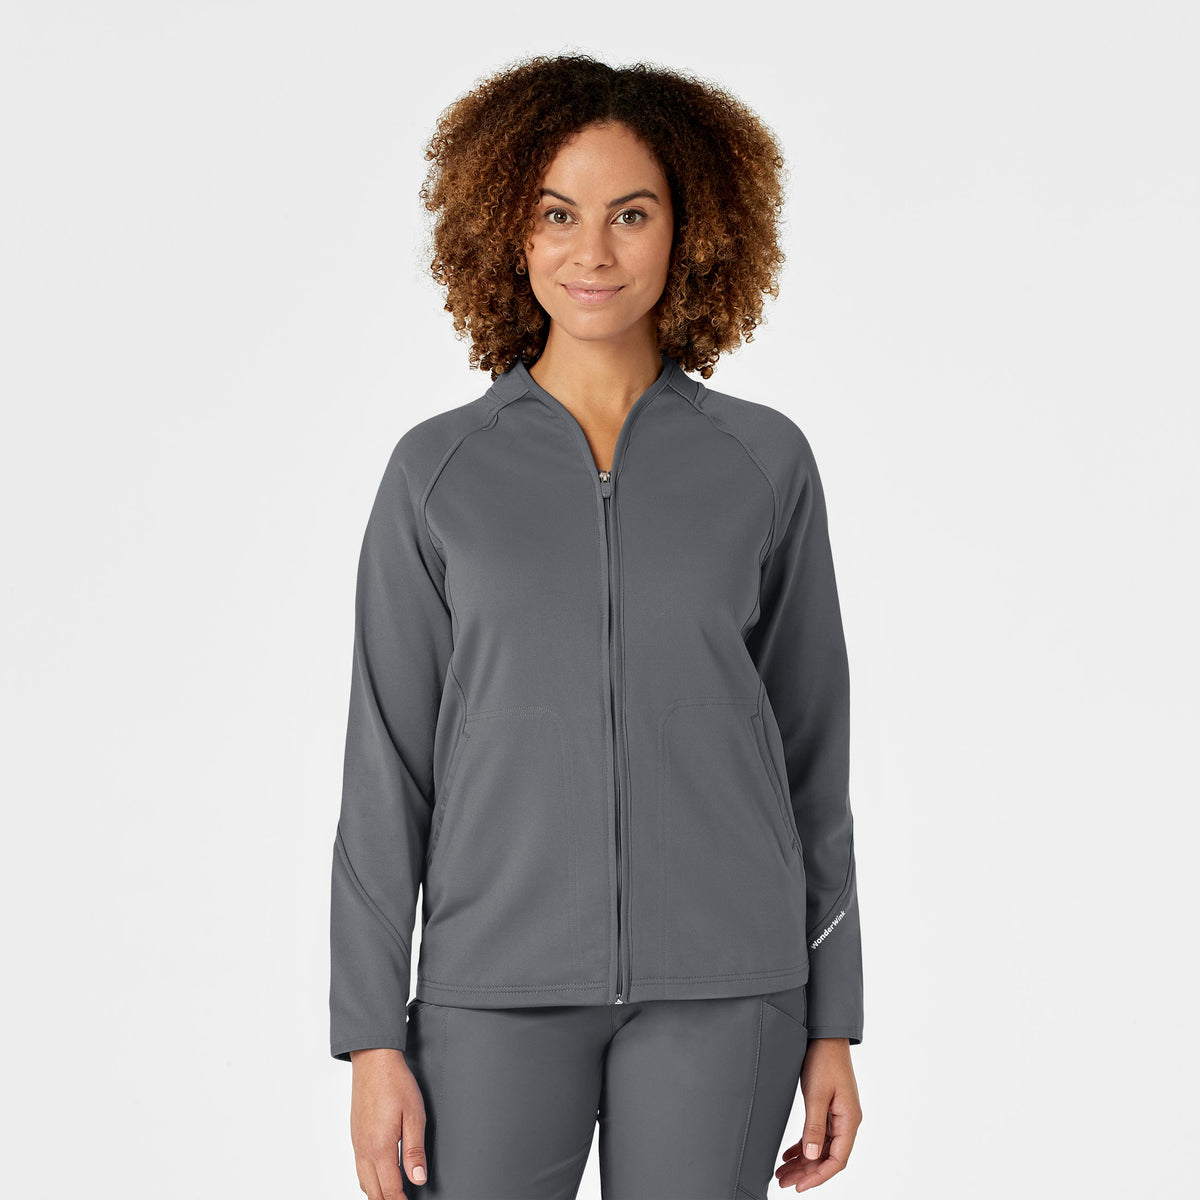 Women's Fleece Full Zip Jacket - Pewter